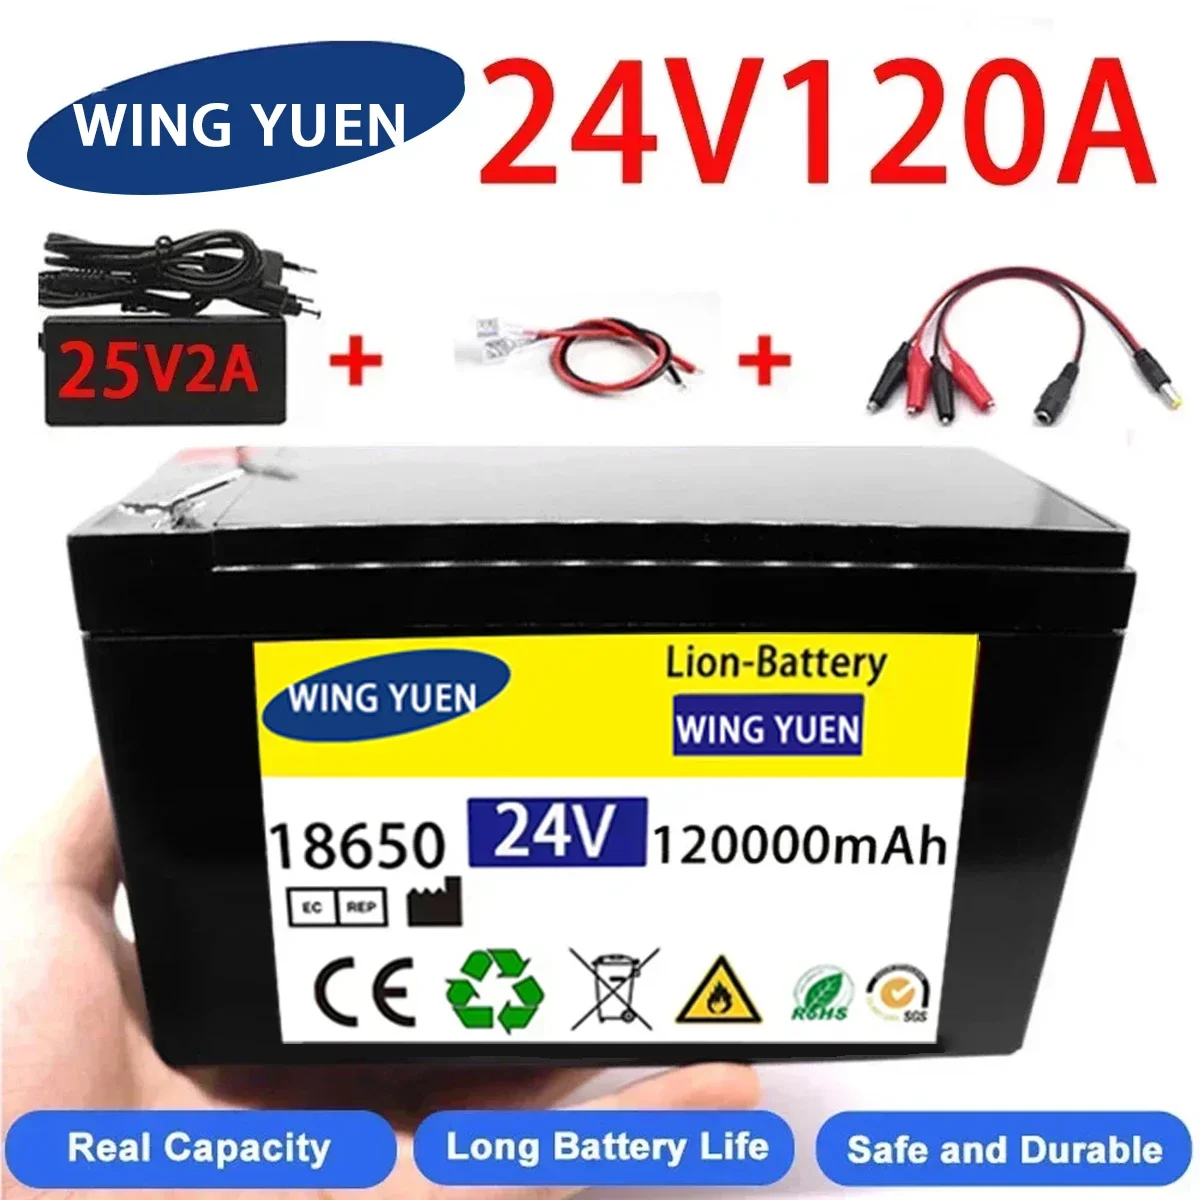 

24v 120A Li Ion 18650 Battery Electric Vehicle Lithium Battery Pack 21V- 25V 35Ah 120Ah Built-in BMS 30A High Current